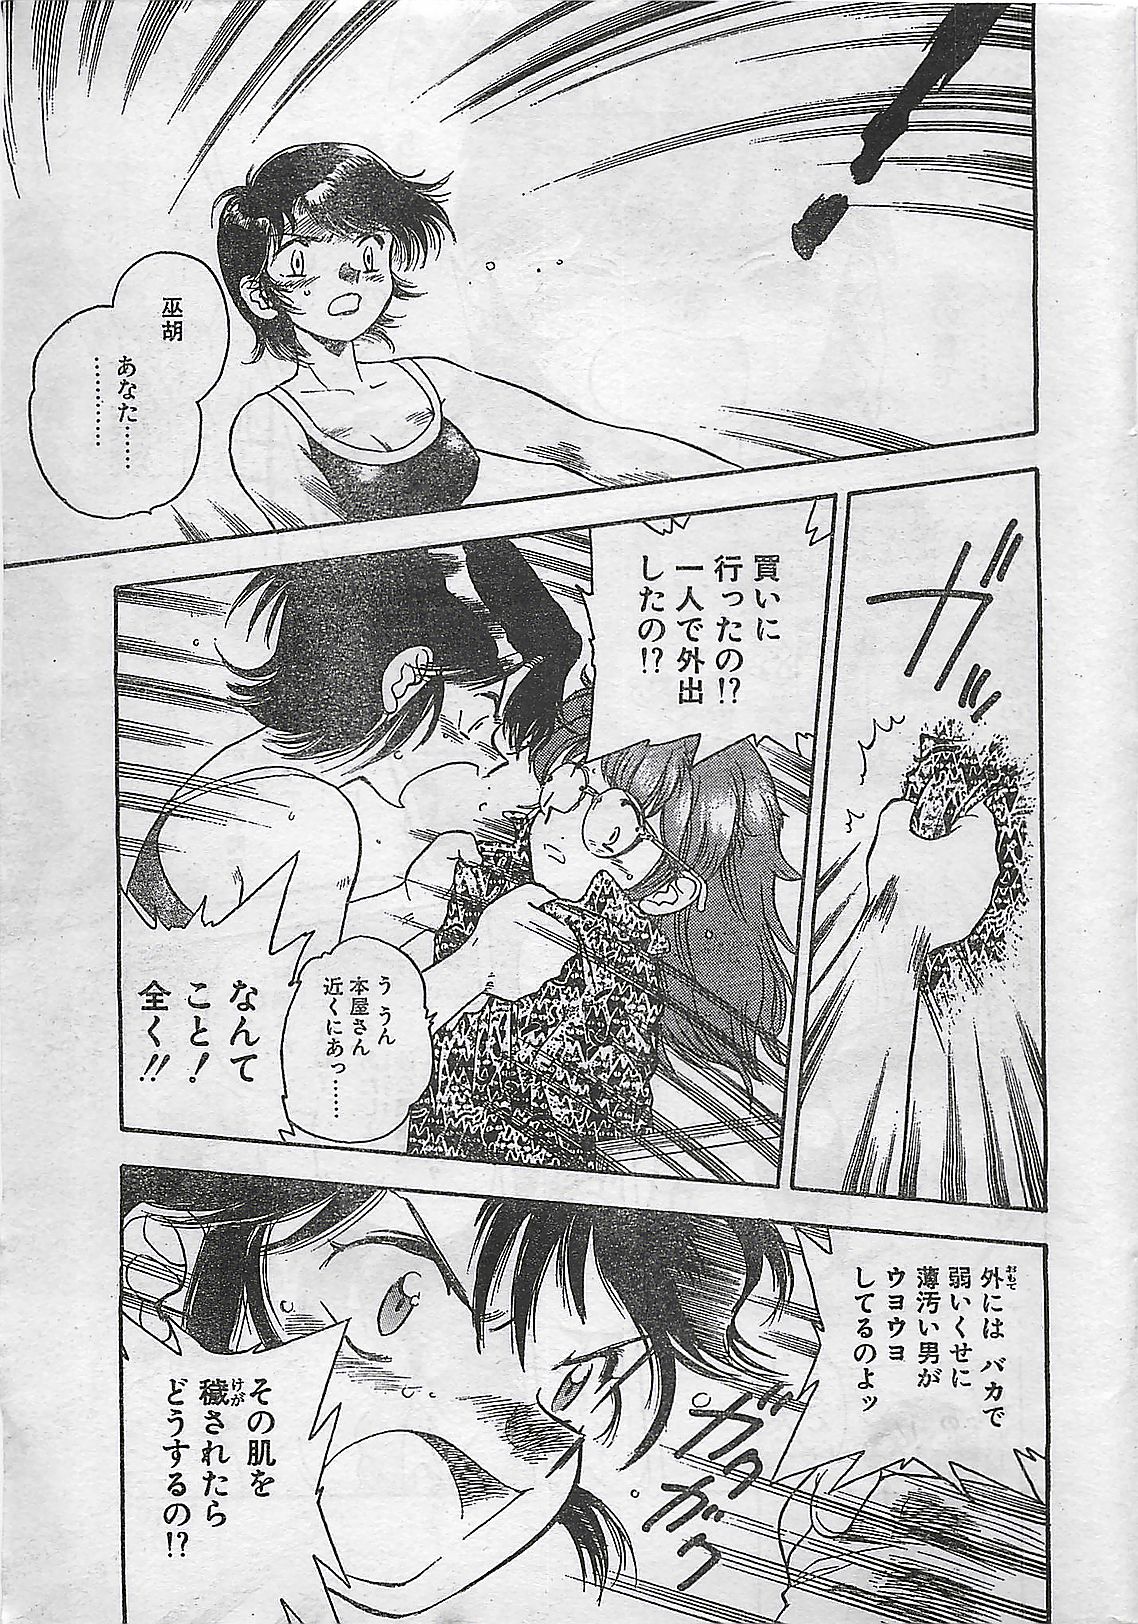 COMIC Natural High Vol.31 1998-03 (雑誌) COMIC ナチュラル・ハイ Vol.31 1998年03月号